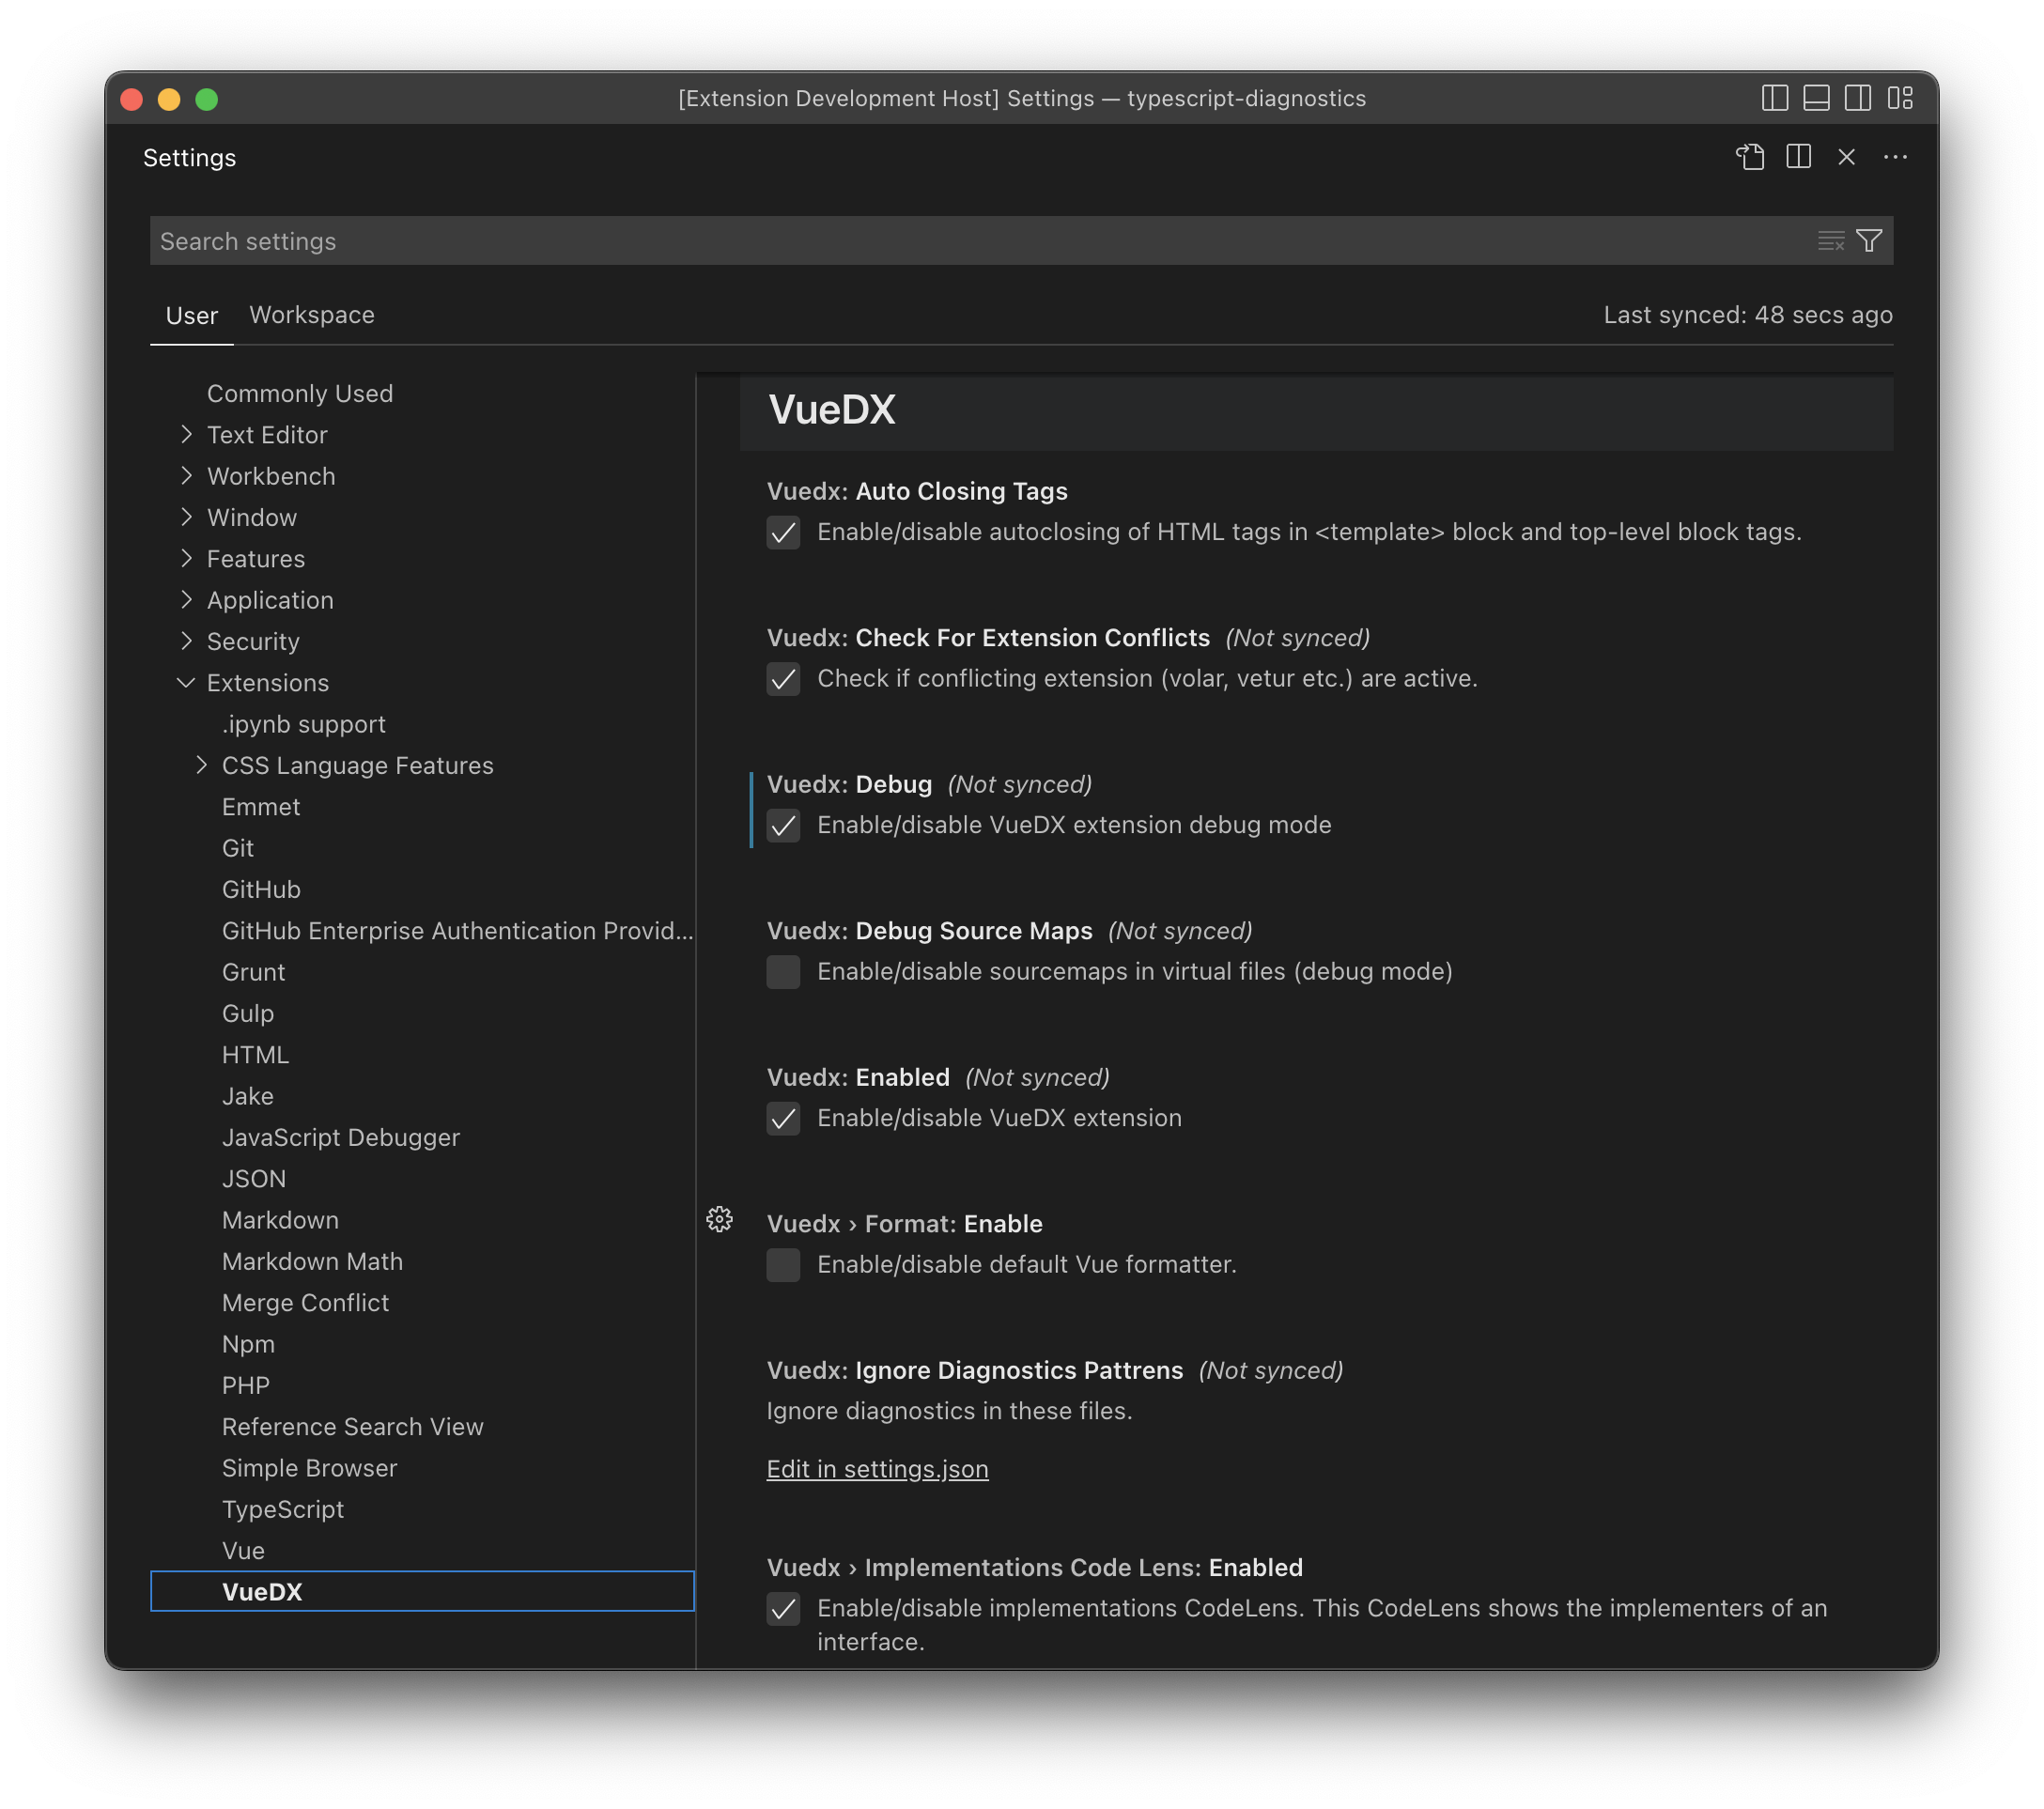 Screenshot of Visual Studio Code preferences for VueDX extension